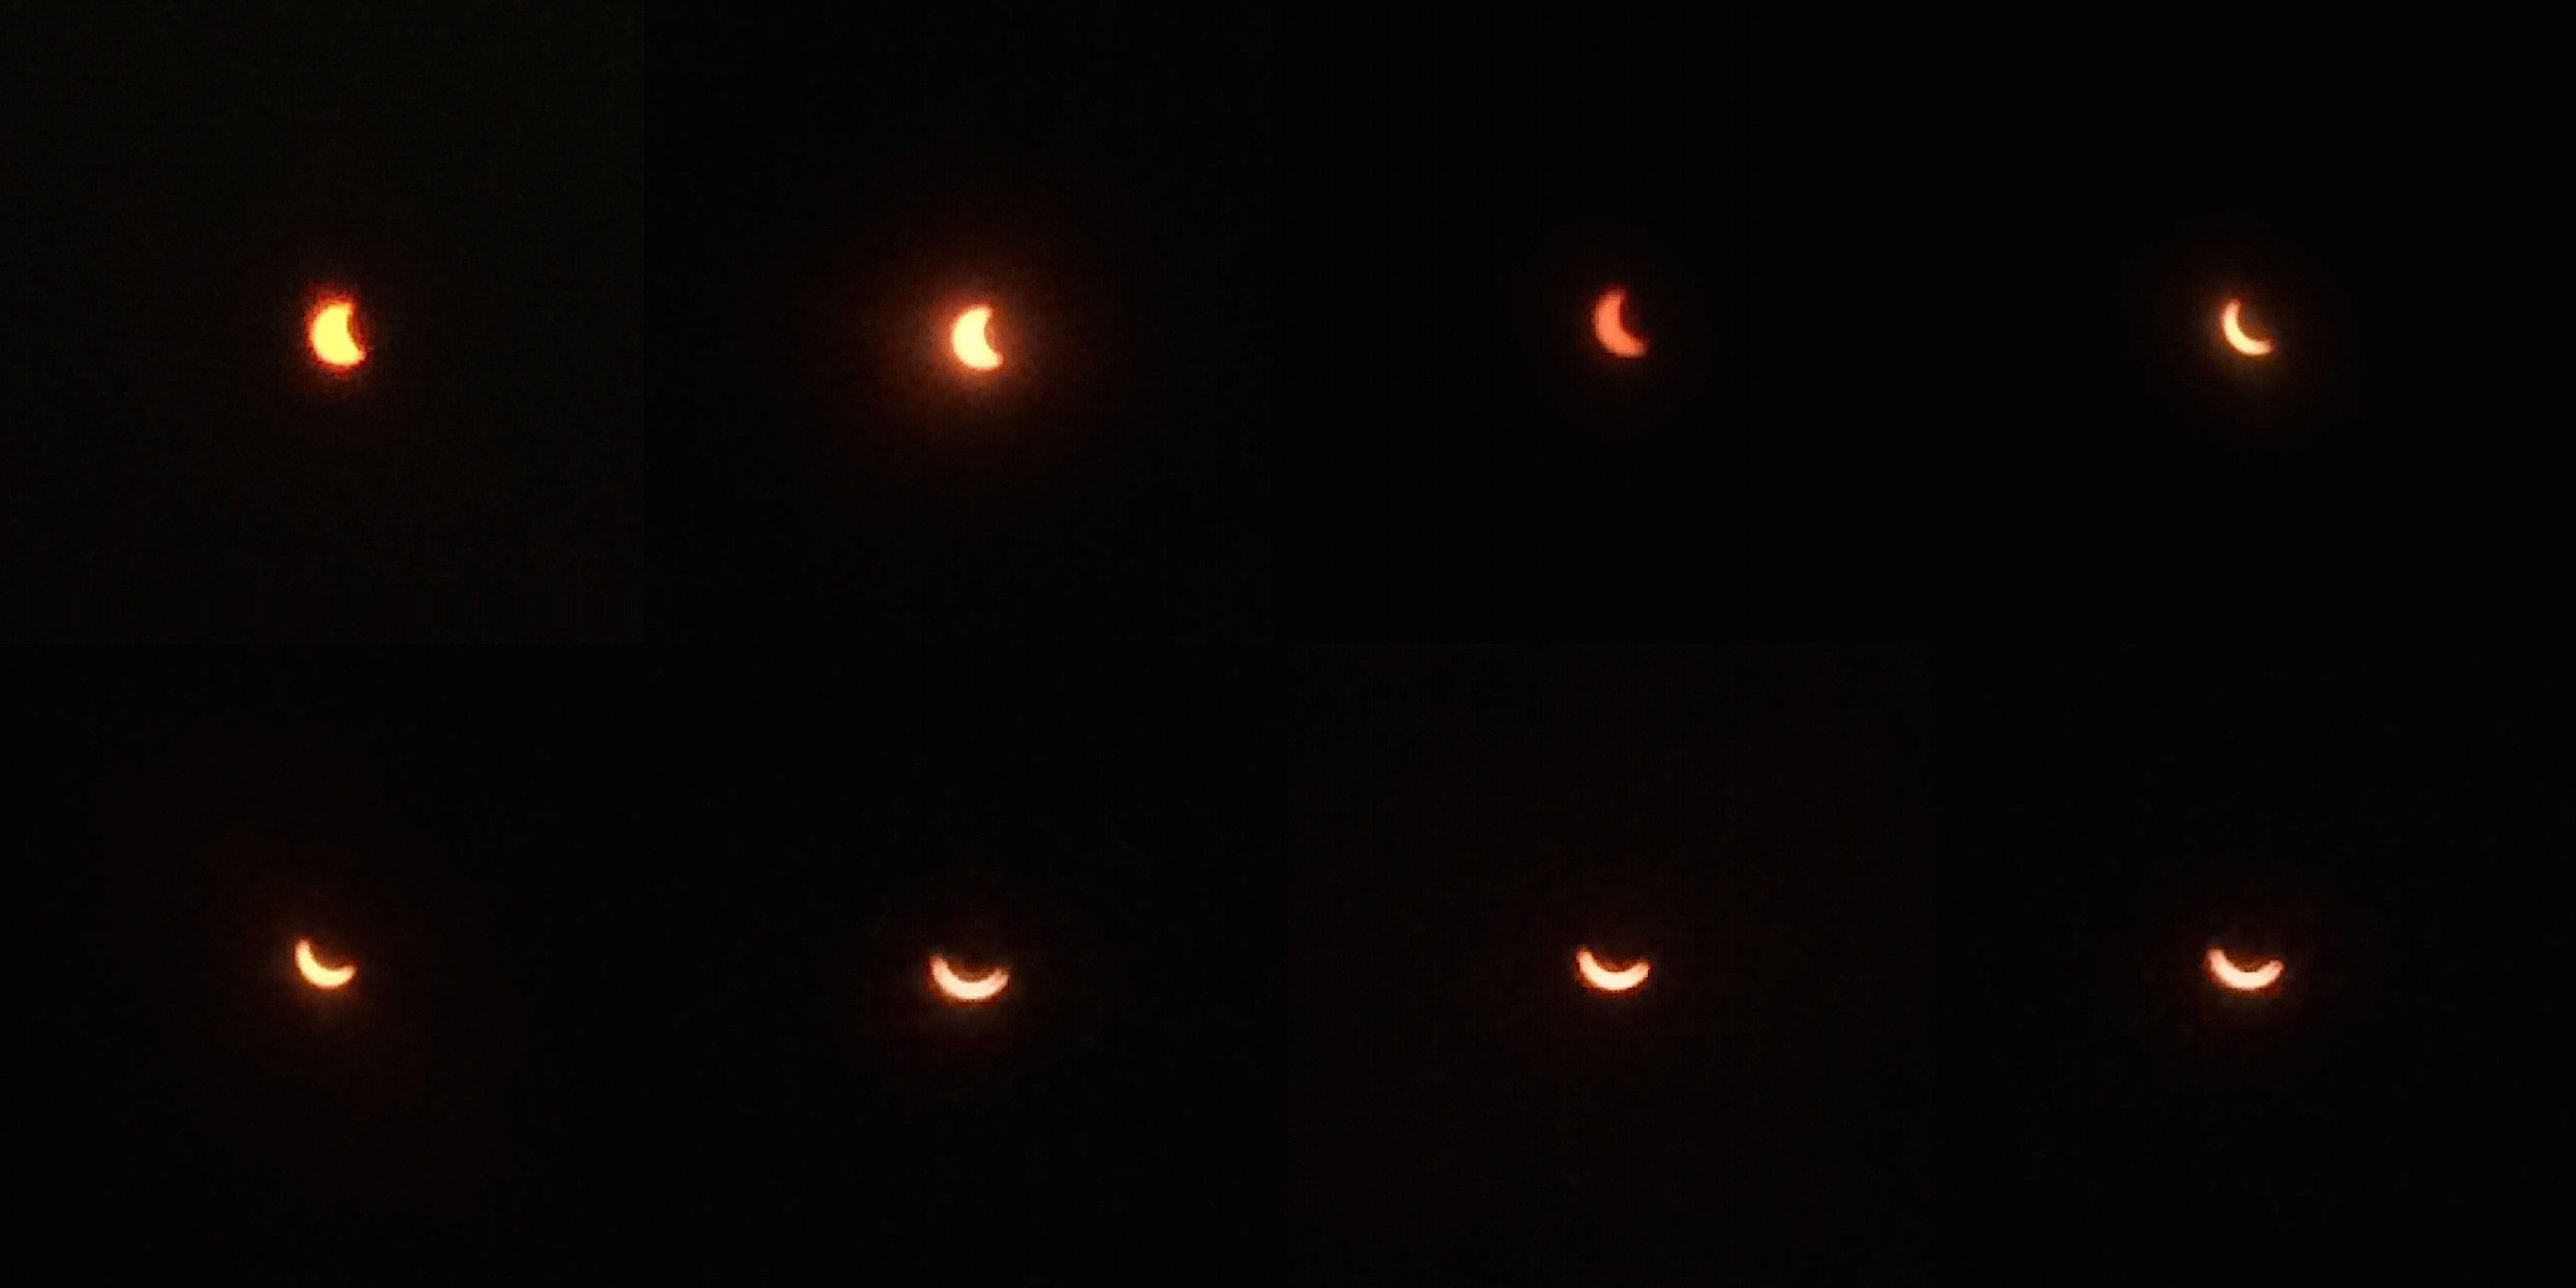 2015 Solar Eclipse chronology